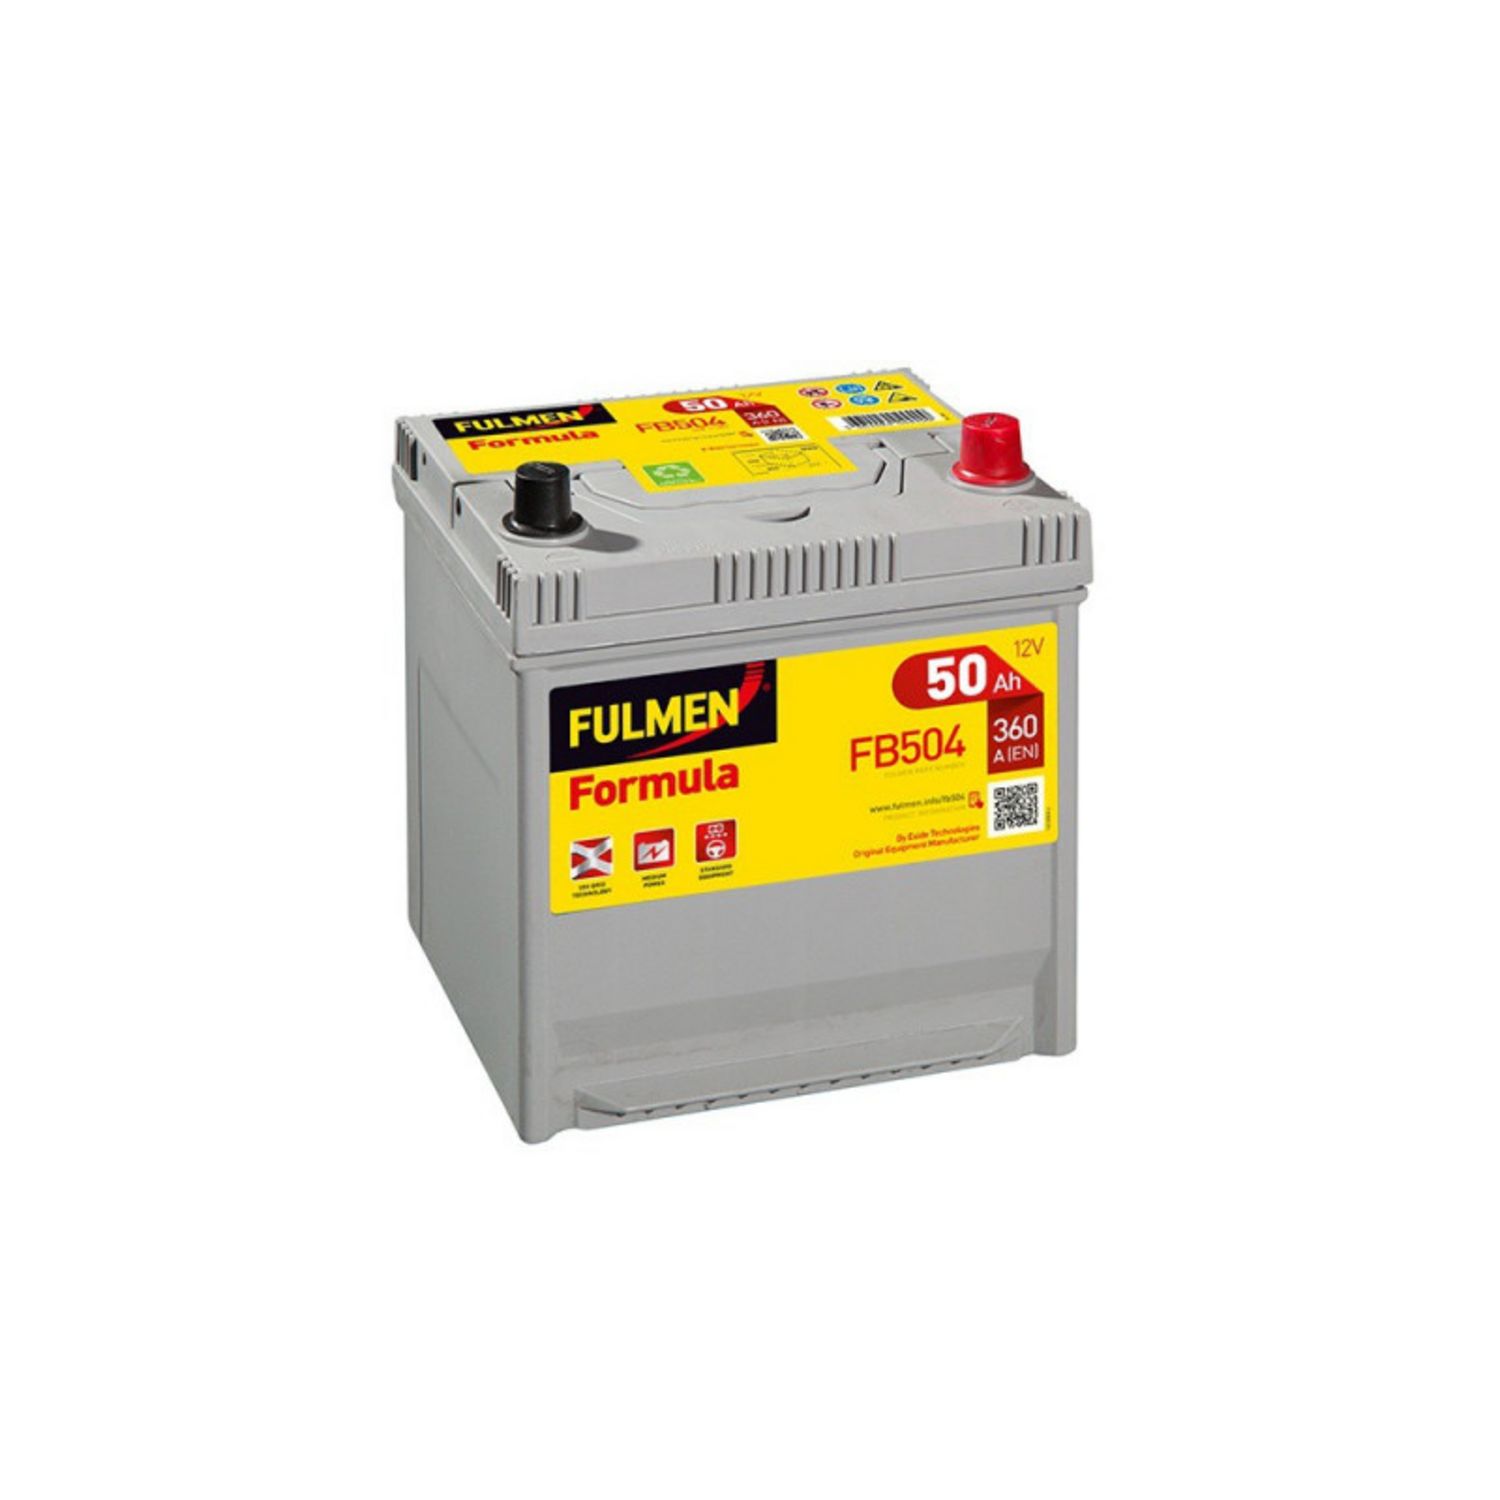 FULMEN Batterie FULMEN Formula FB800 12v 80AH 640A pas cher 